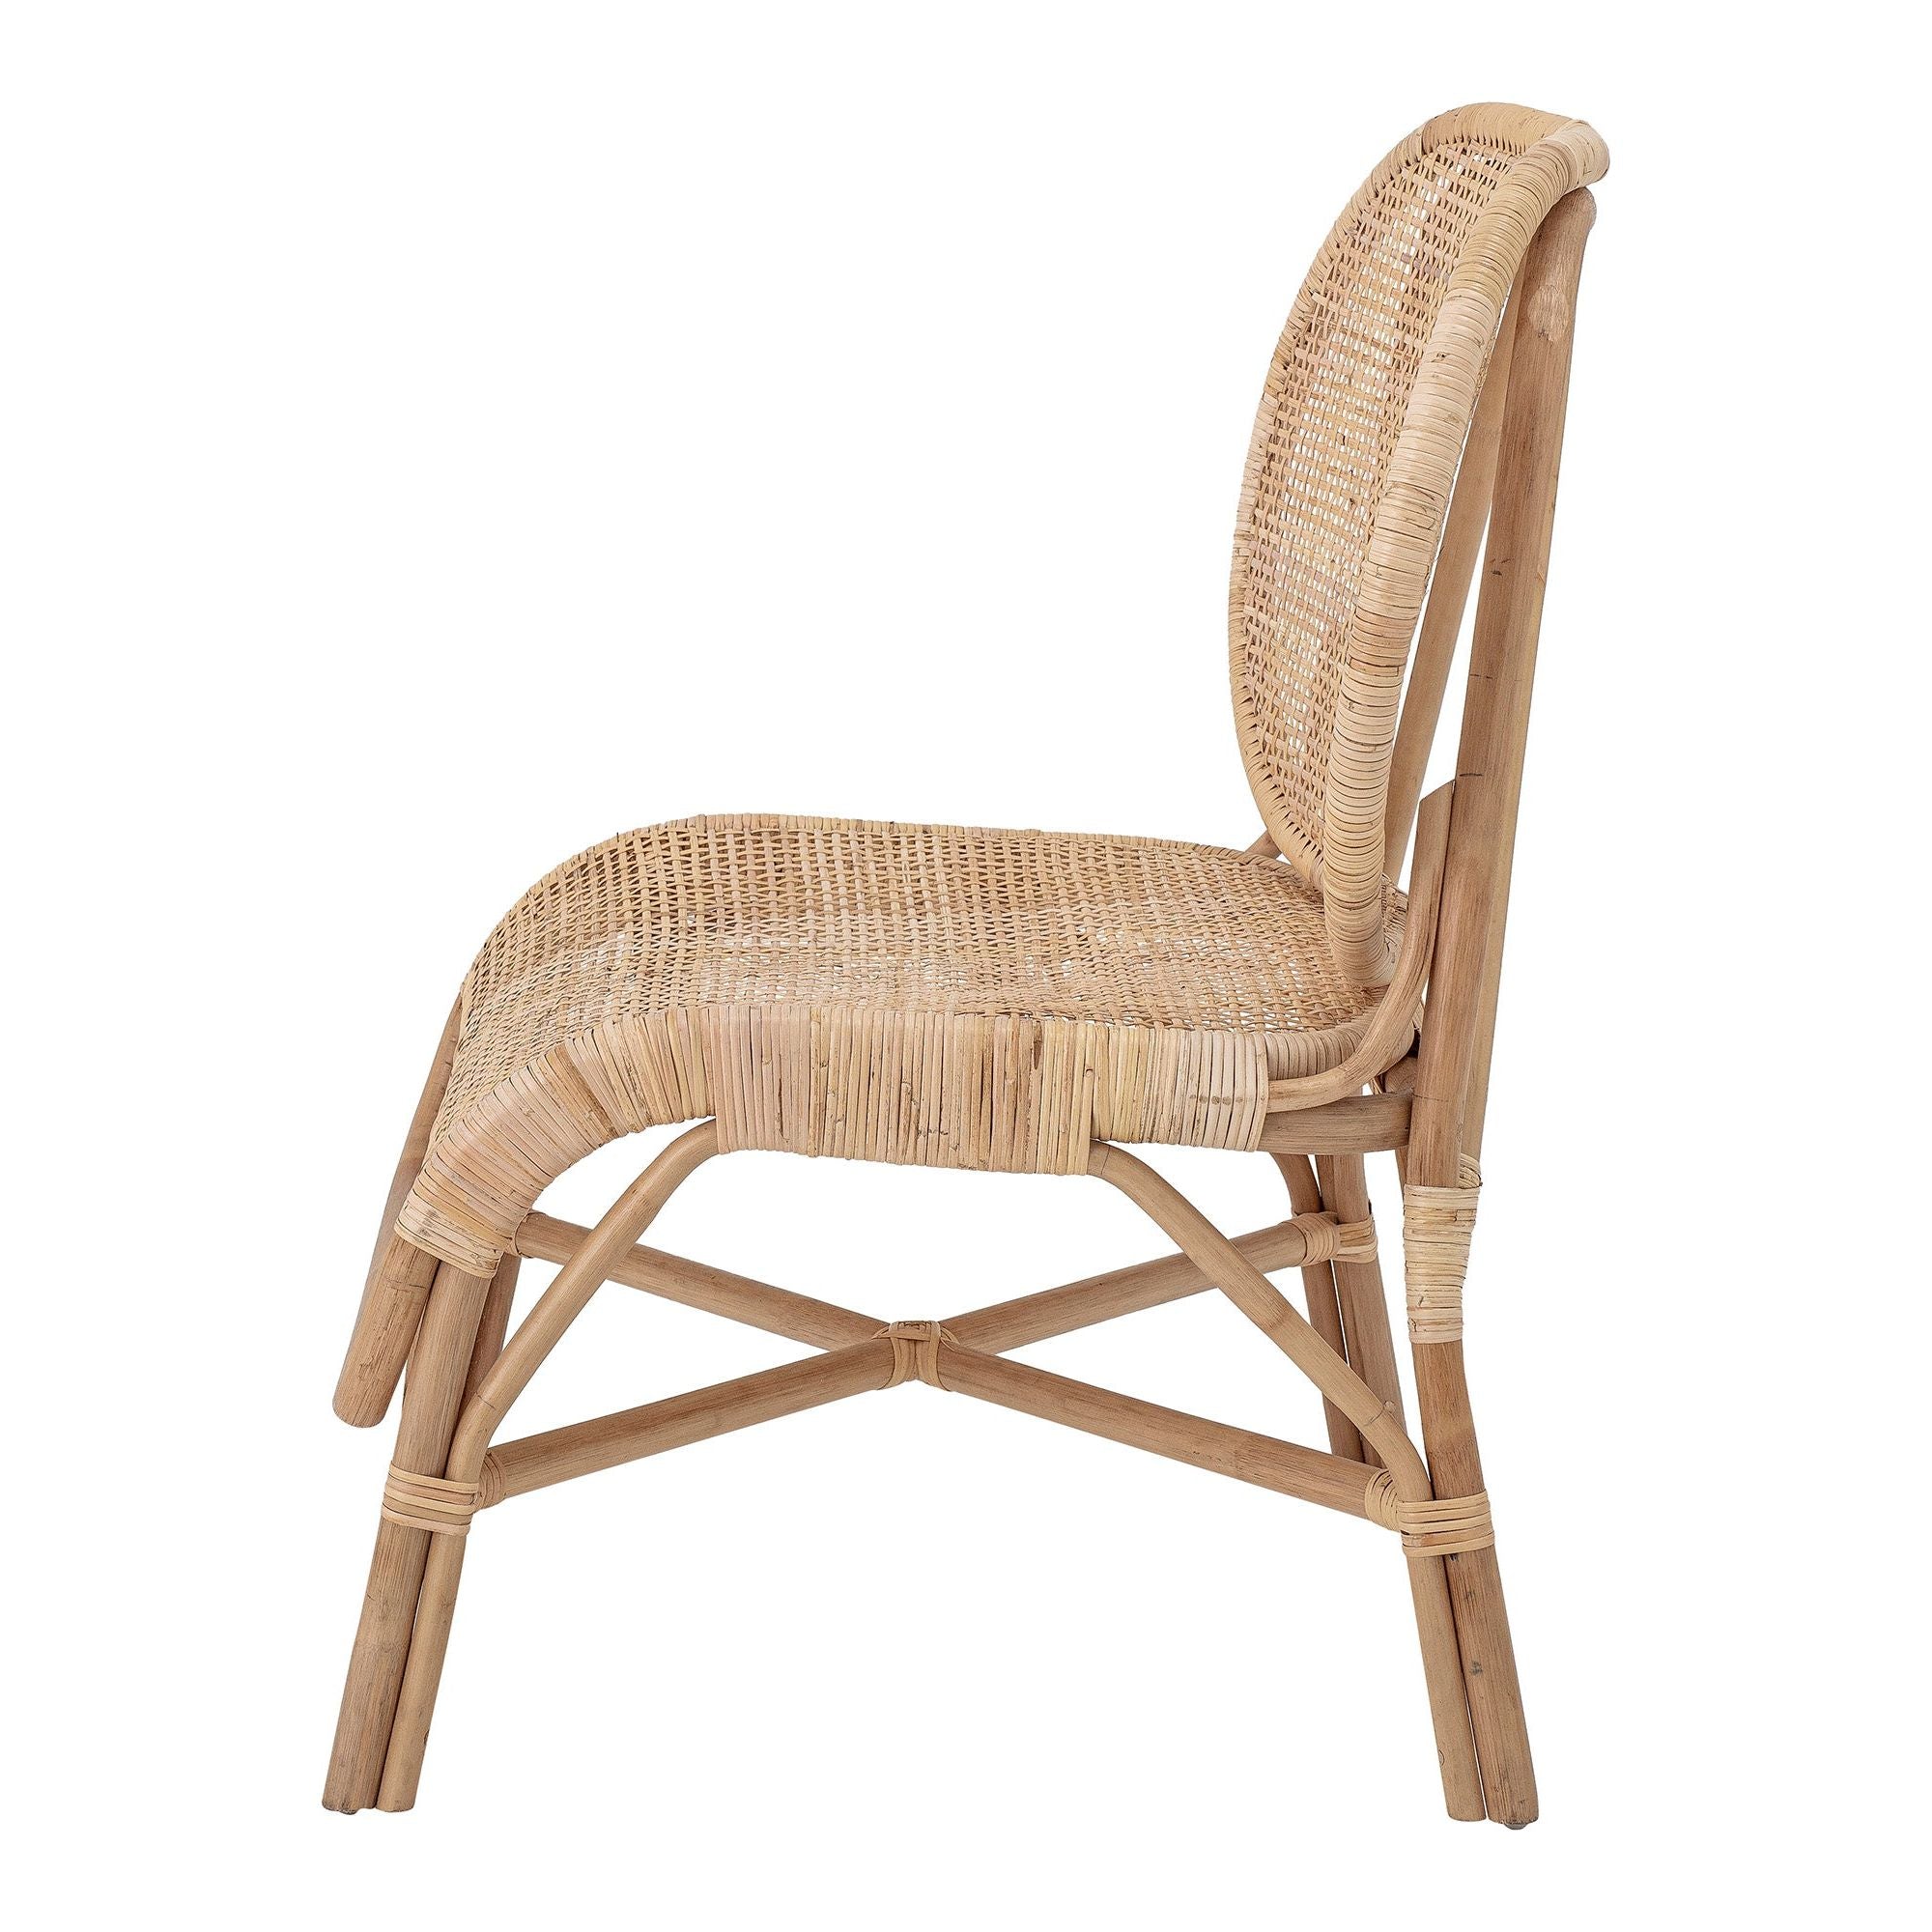 "ROSEN" poilsio kėdė, natūrali spalva, ratanas